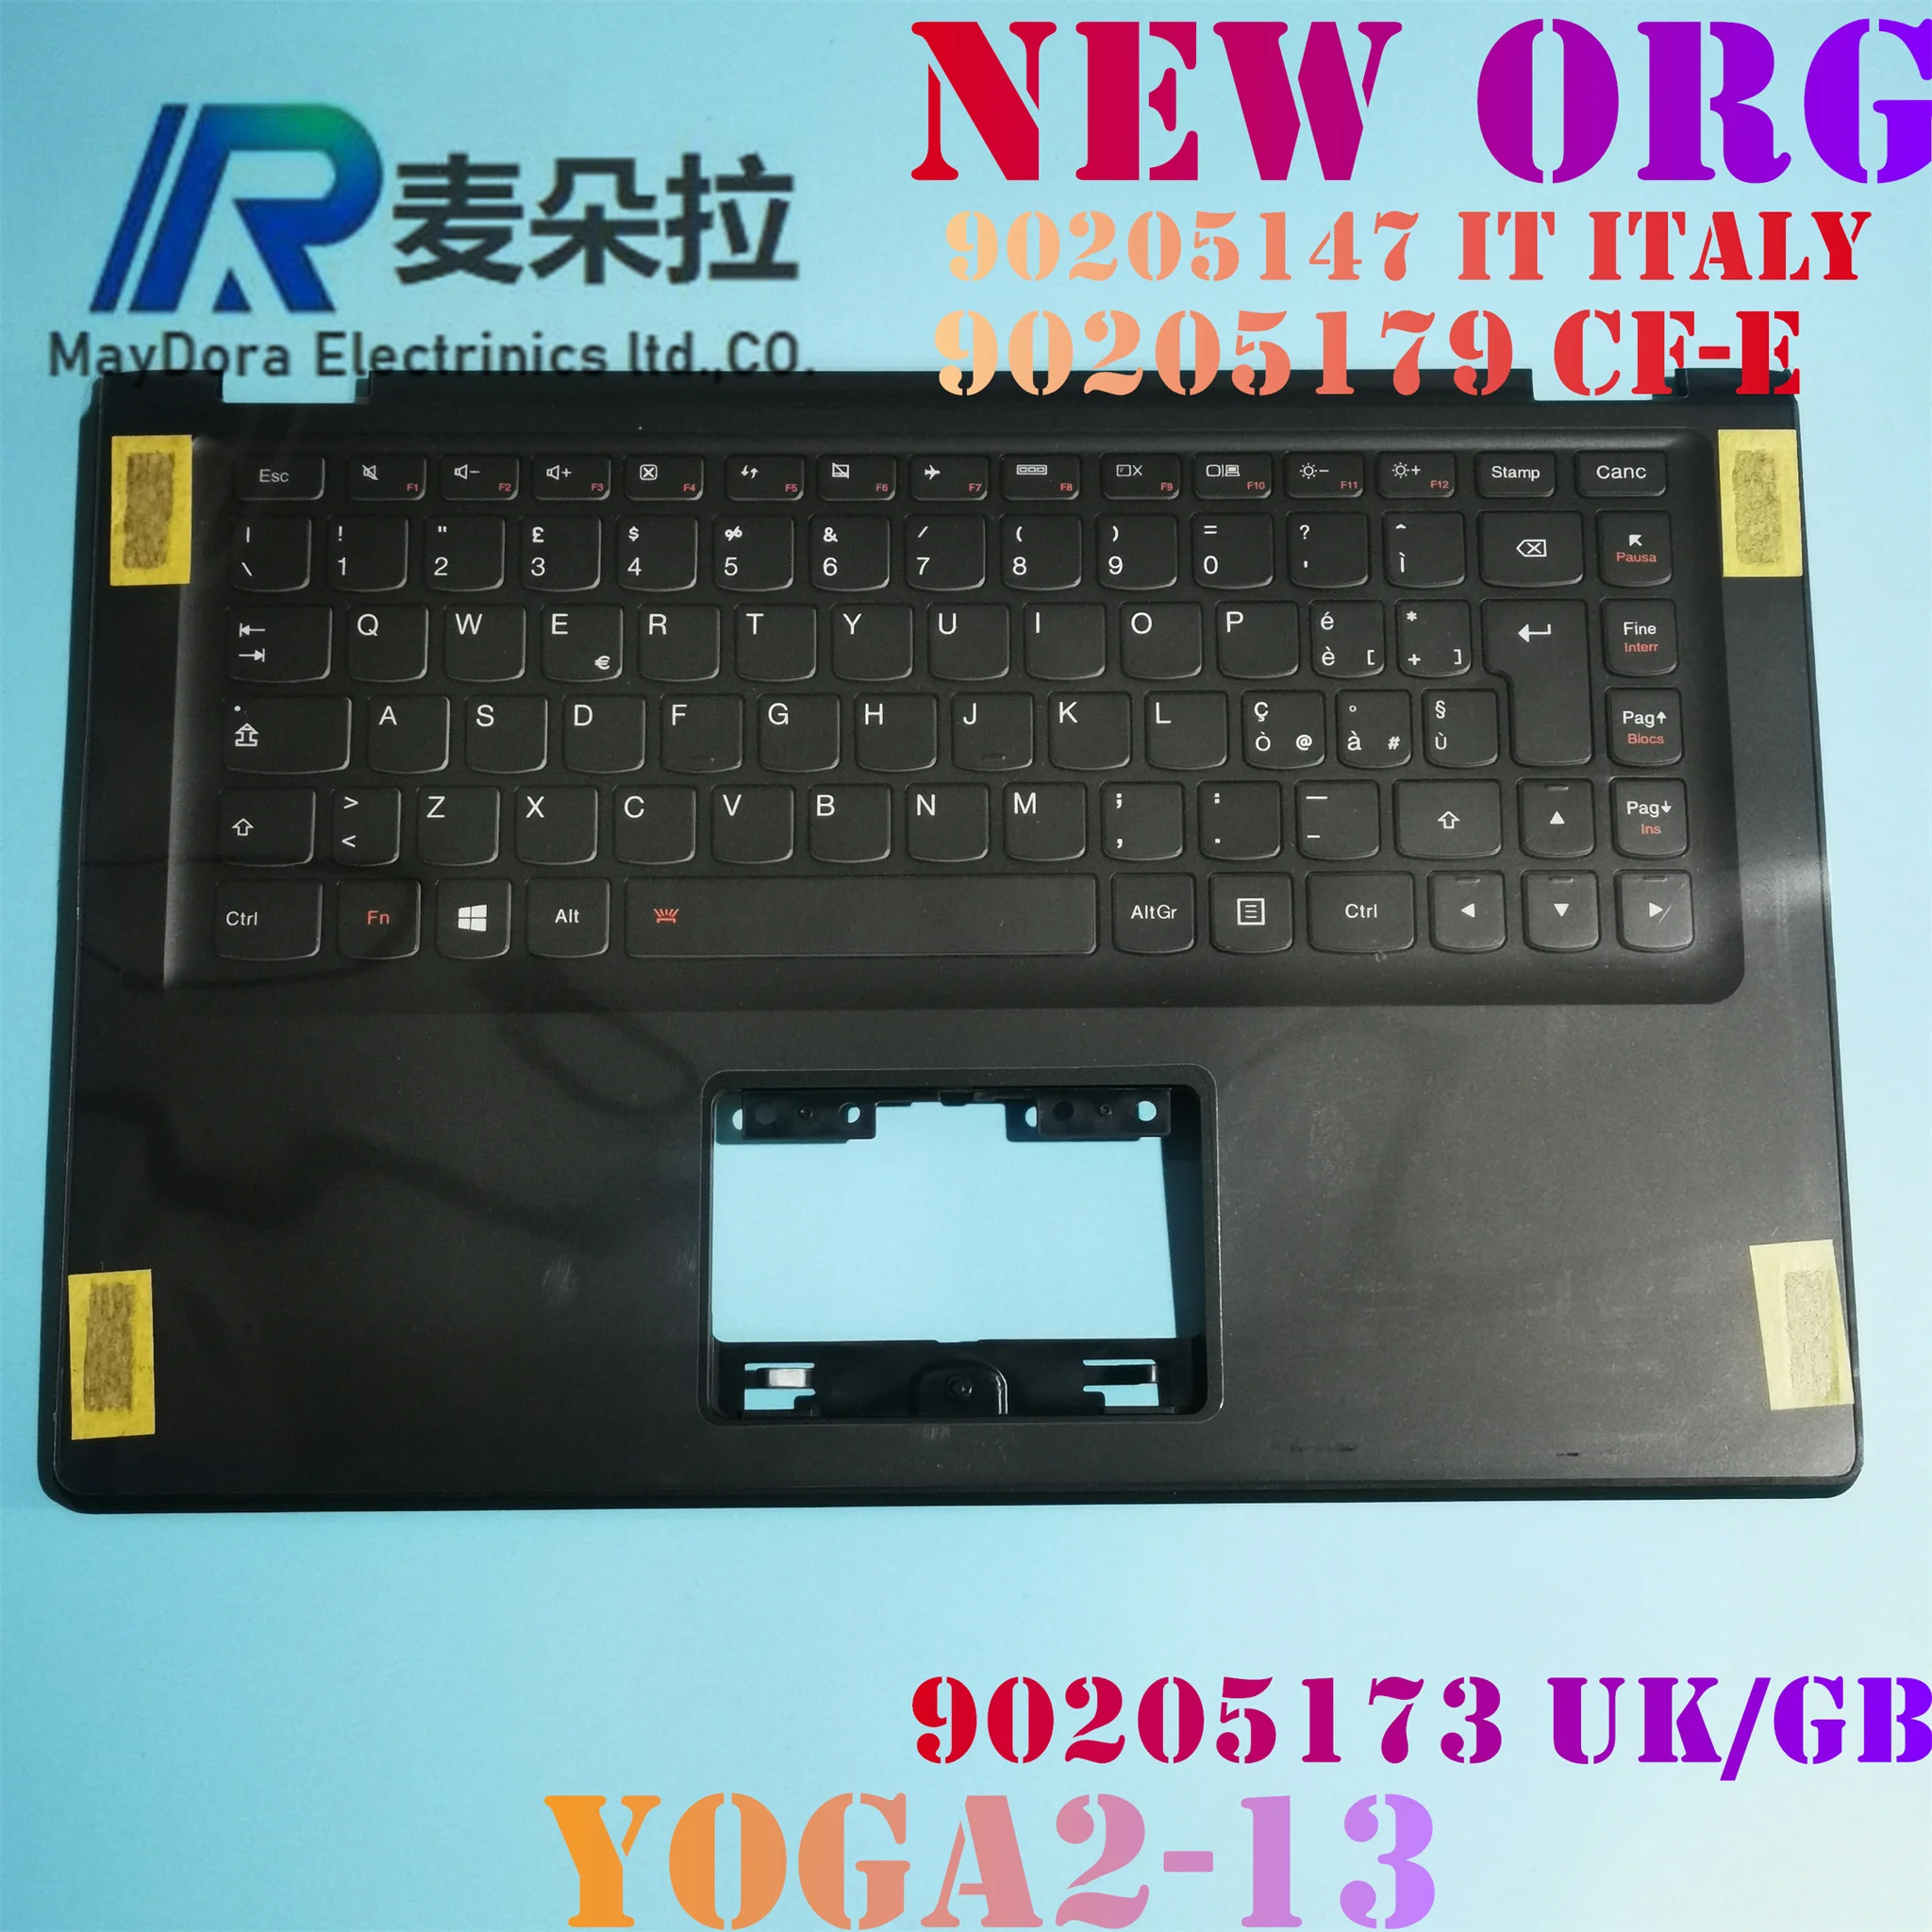 GB-UK  IT SW GR CF-E  Backlight  Keyboard Palmrest assembly for Lenovo Yoga2-13 yoga 2-13 BLACK  90205173 90205179 90205174